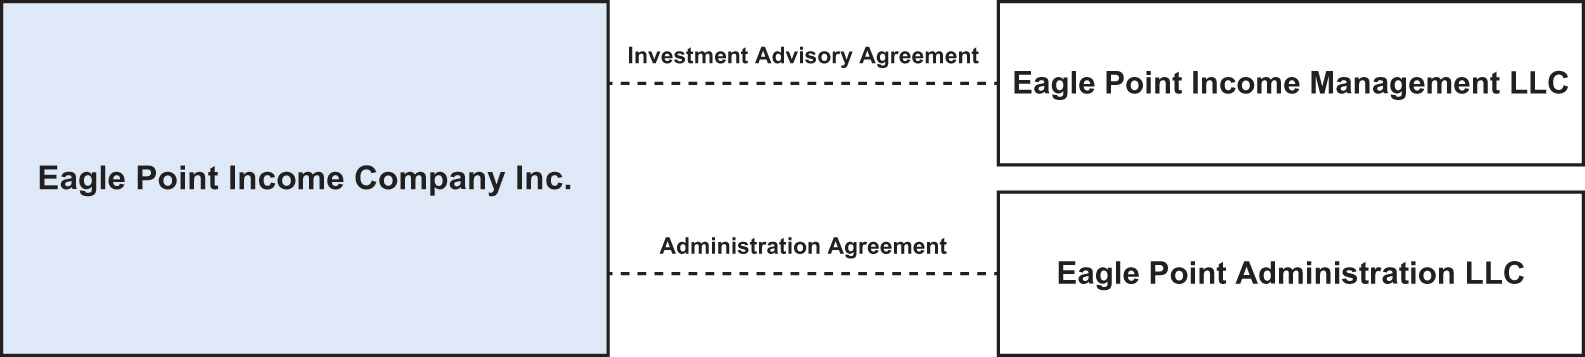 fc_agreement-4c.jpg